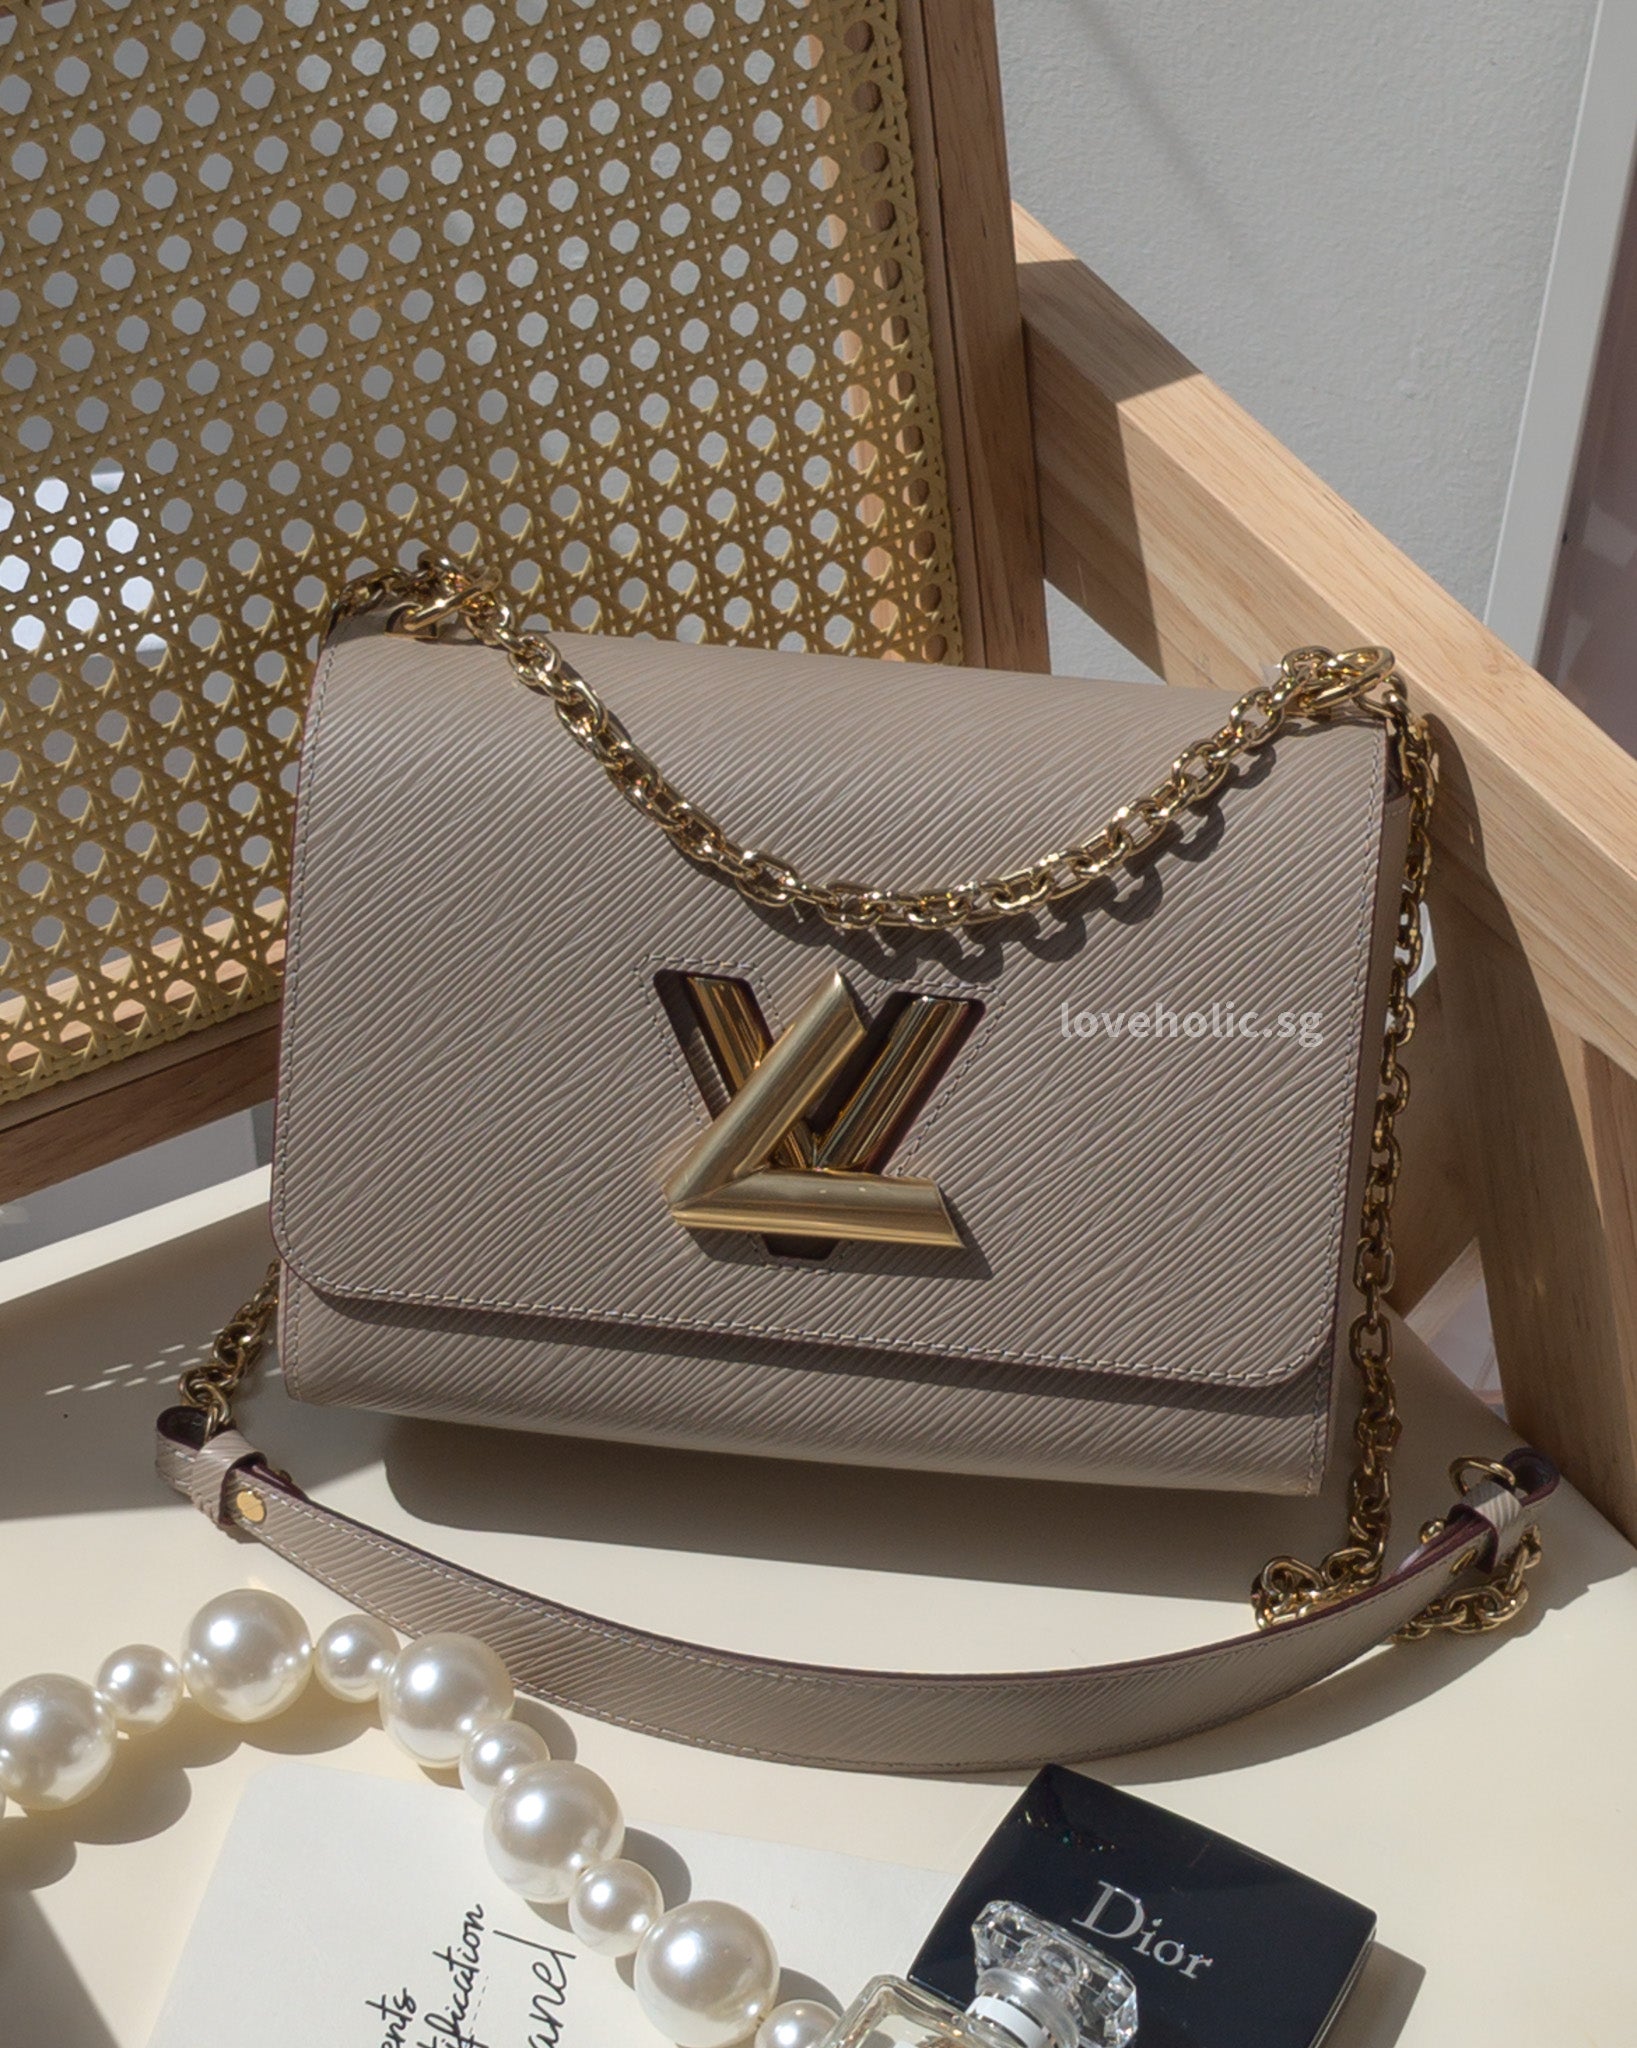 Louis Vuitton Twist Bags & Handbags for Women, Authenticity Guaranteed